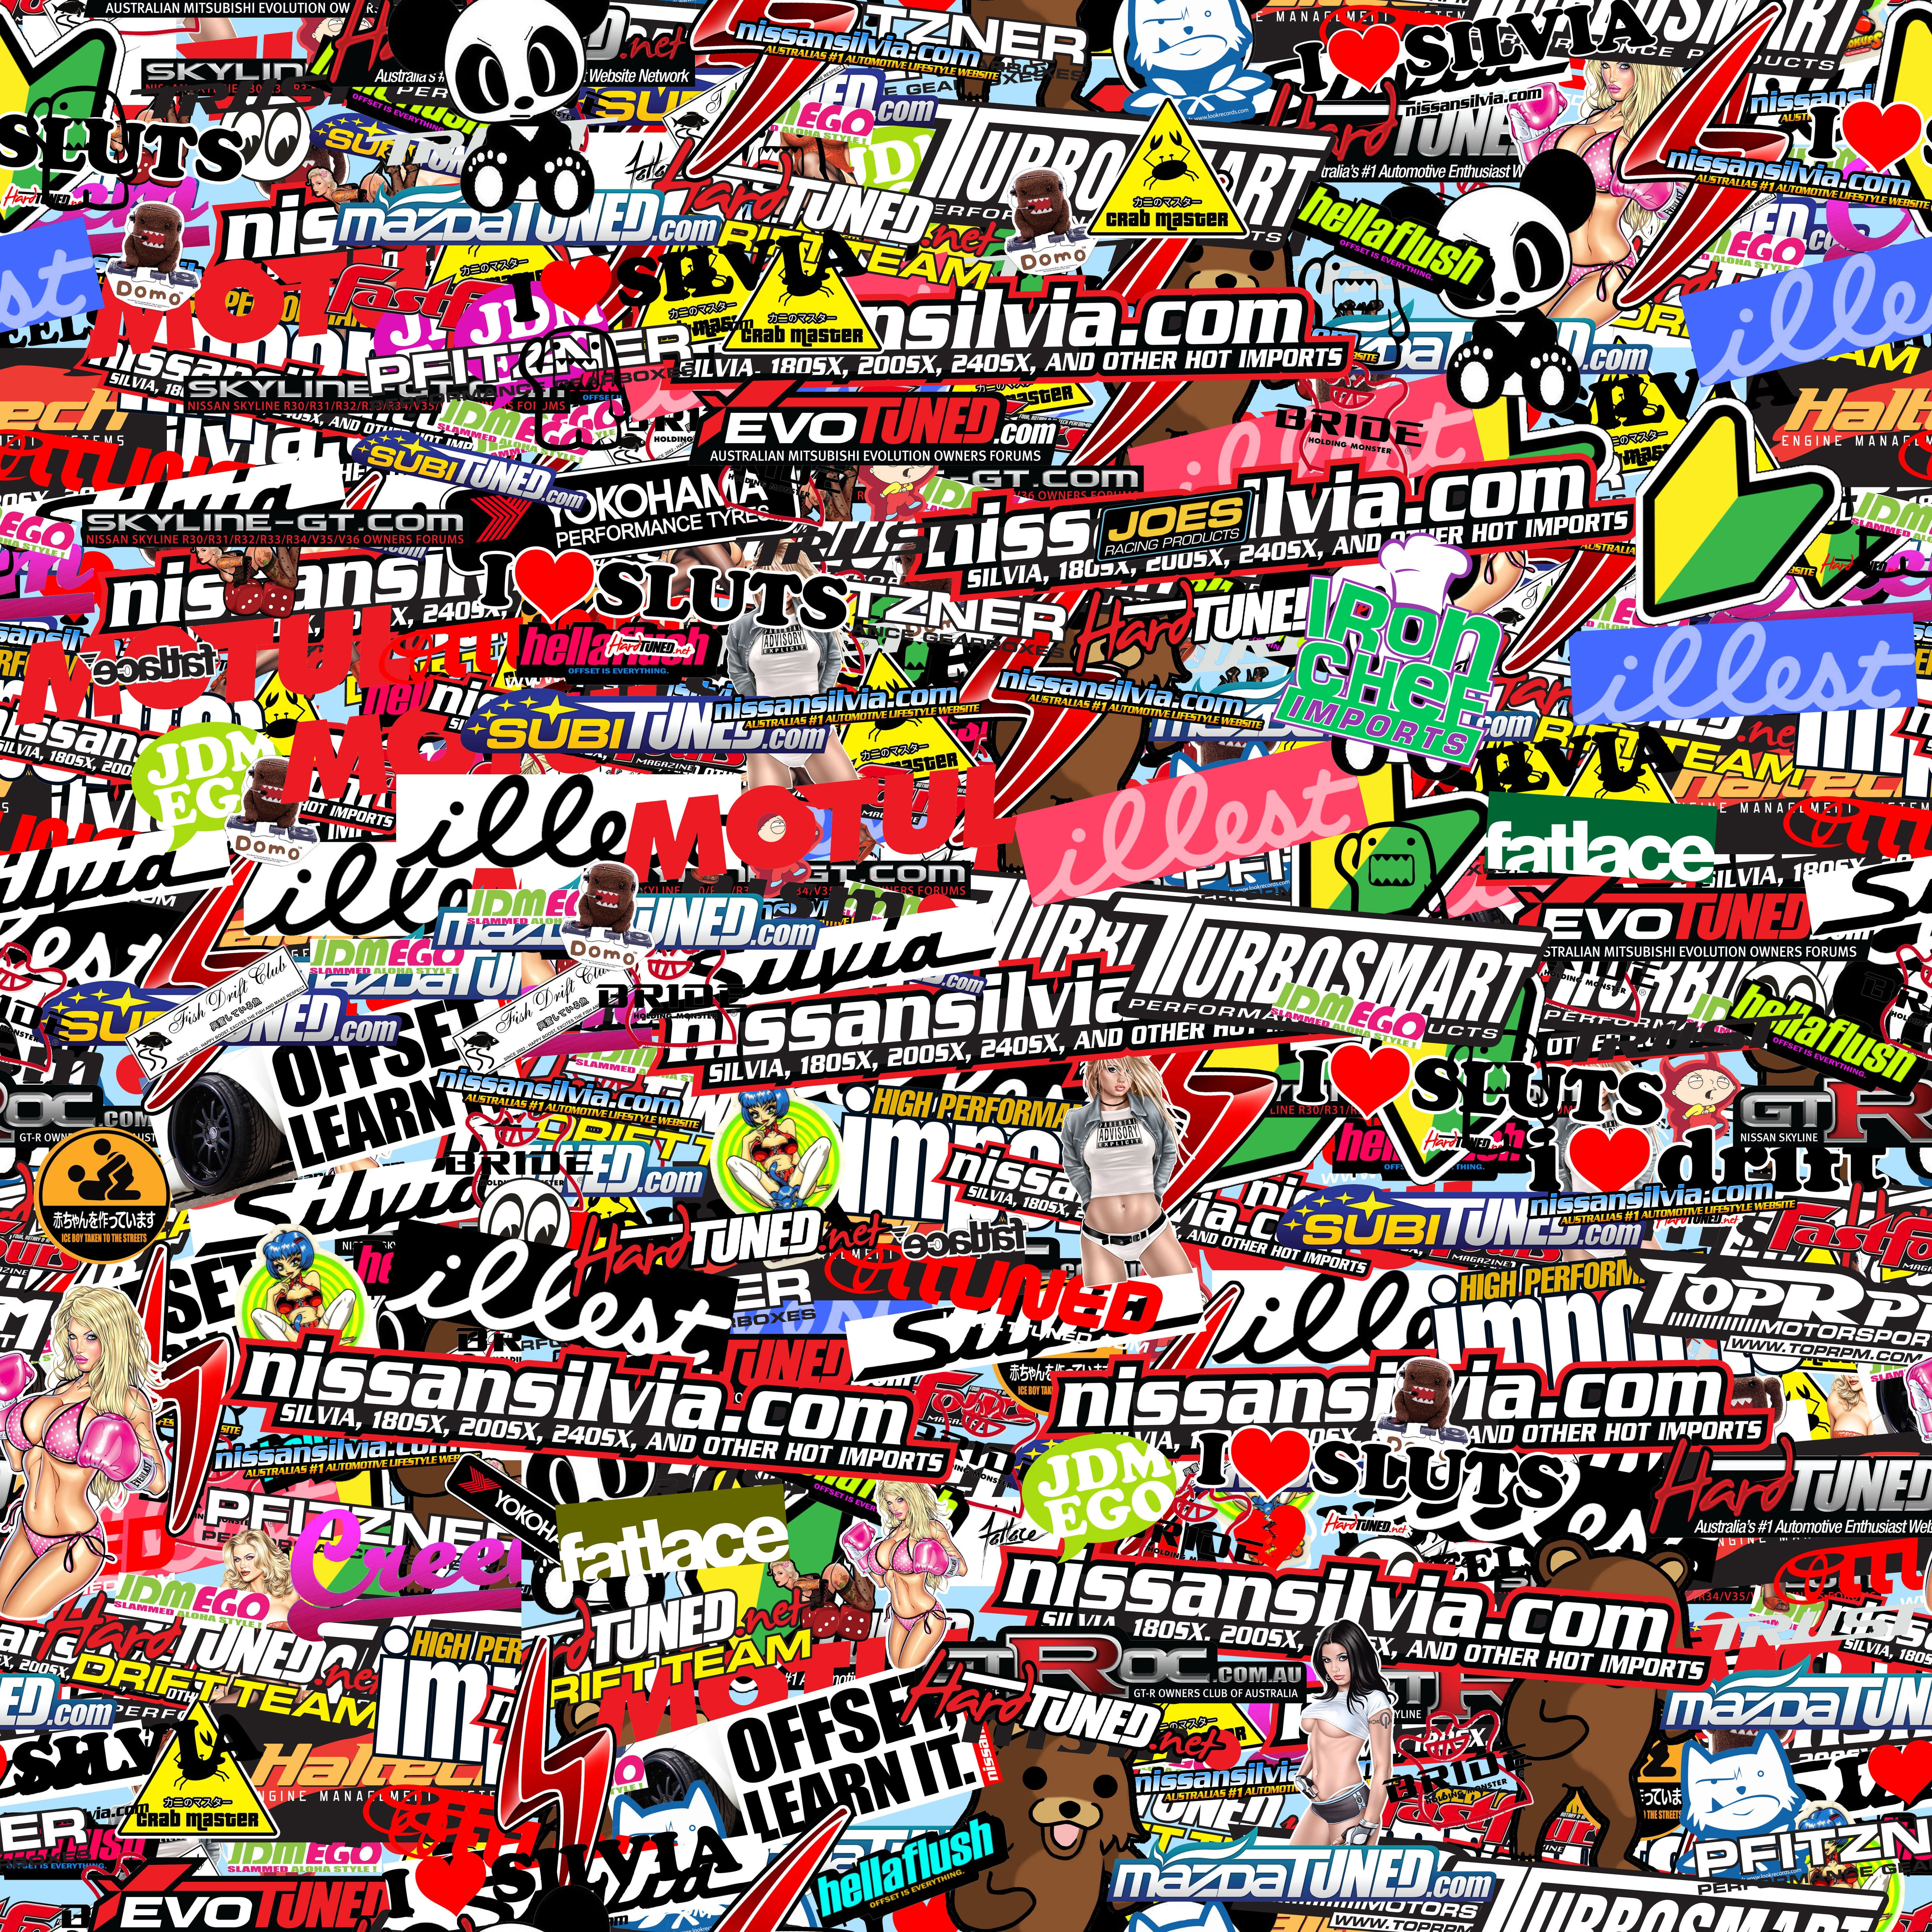 Illest collage wallpaper, Sticker Bomb, sticks, bombs, text, multi colored